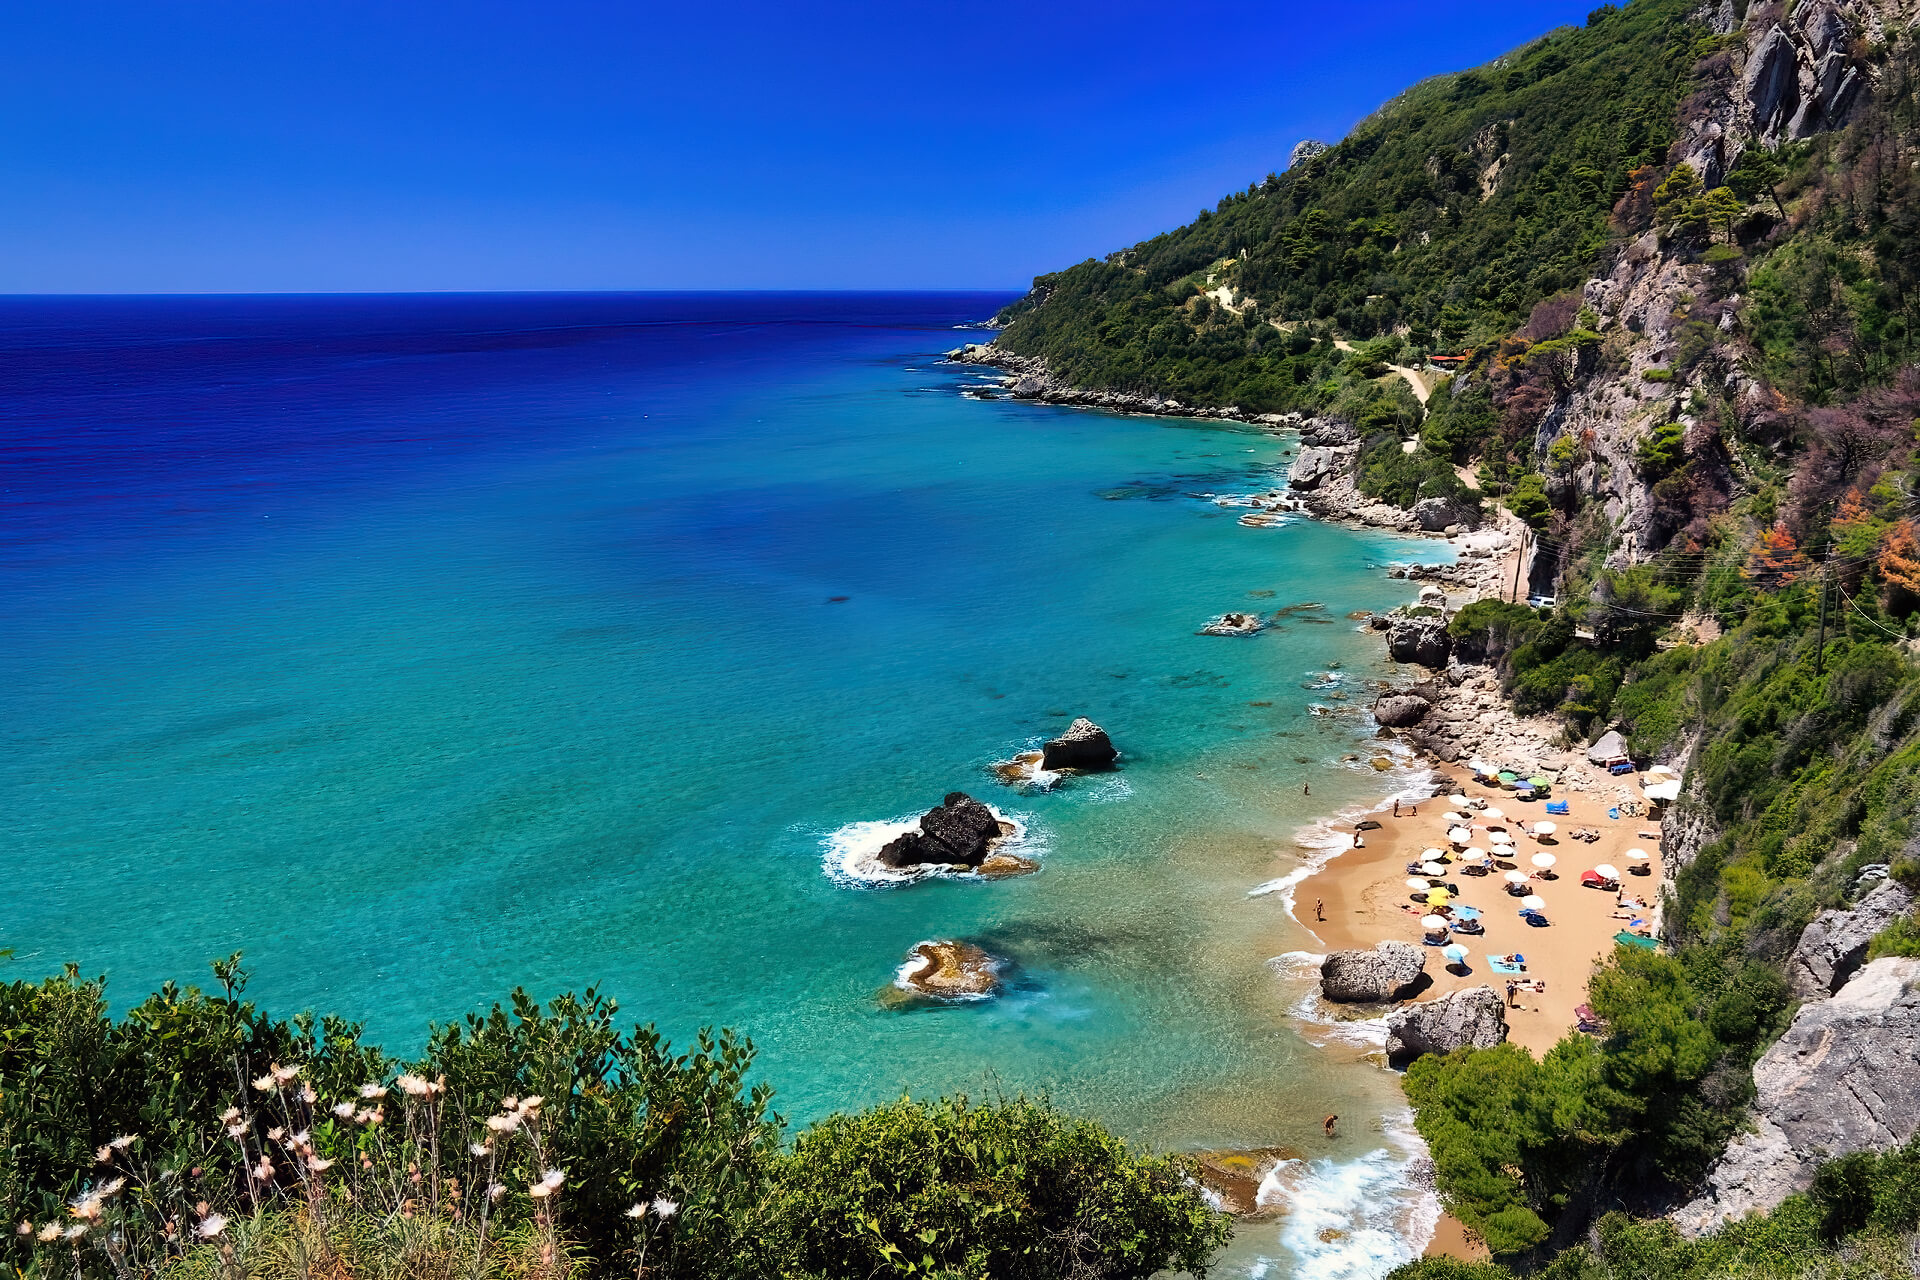 Corfu Mirtiotissa Beach - A Picturesque FKK Paradise